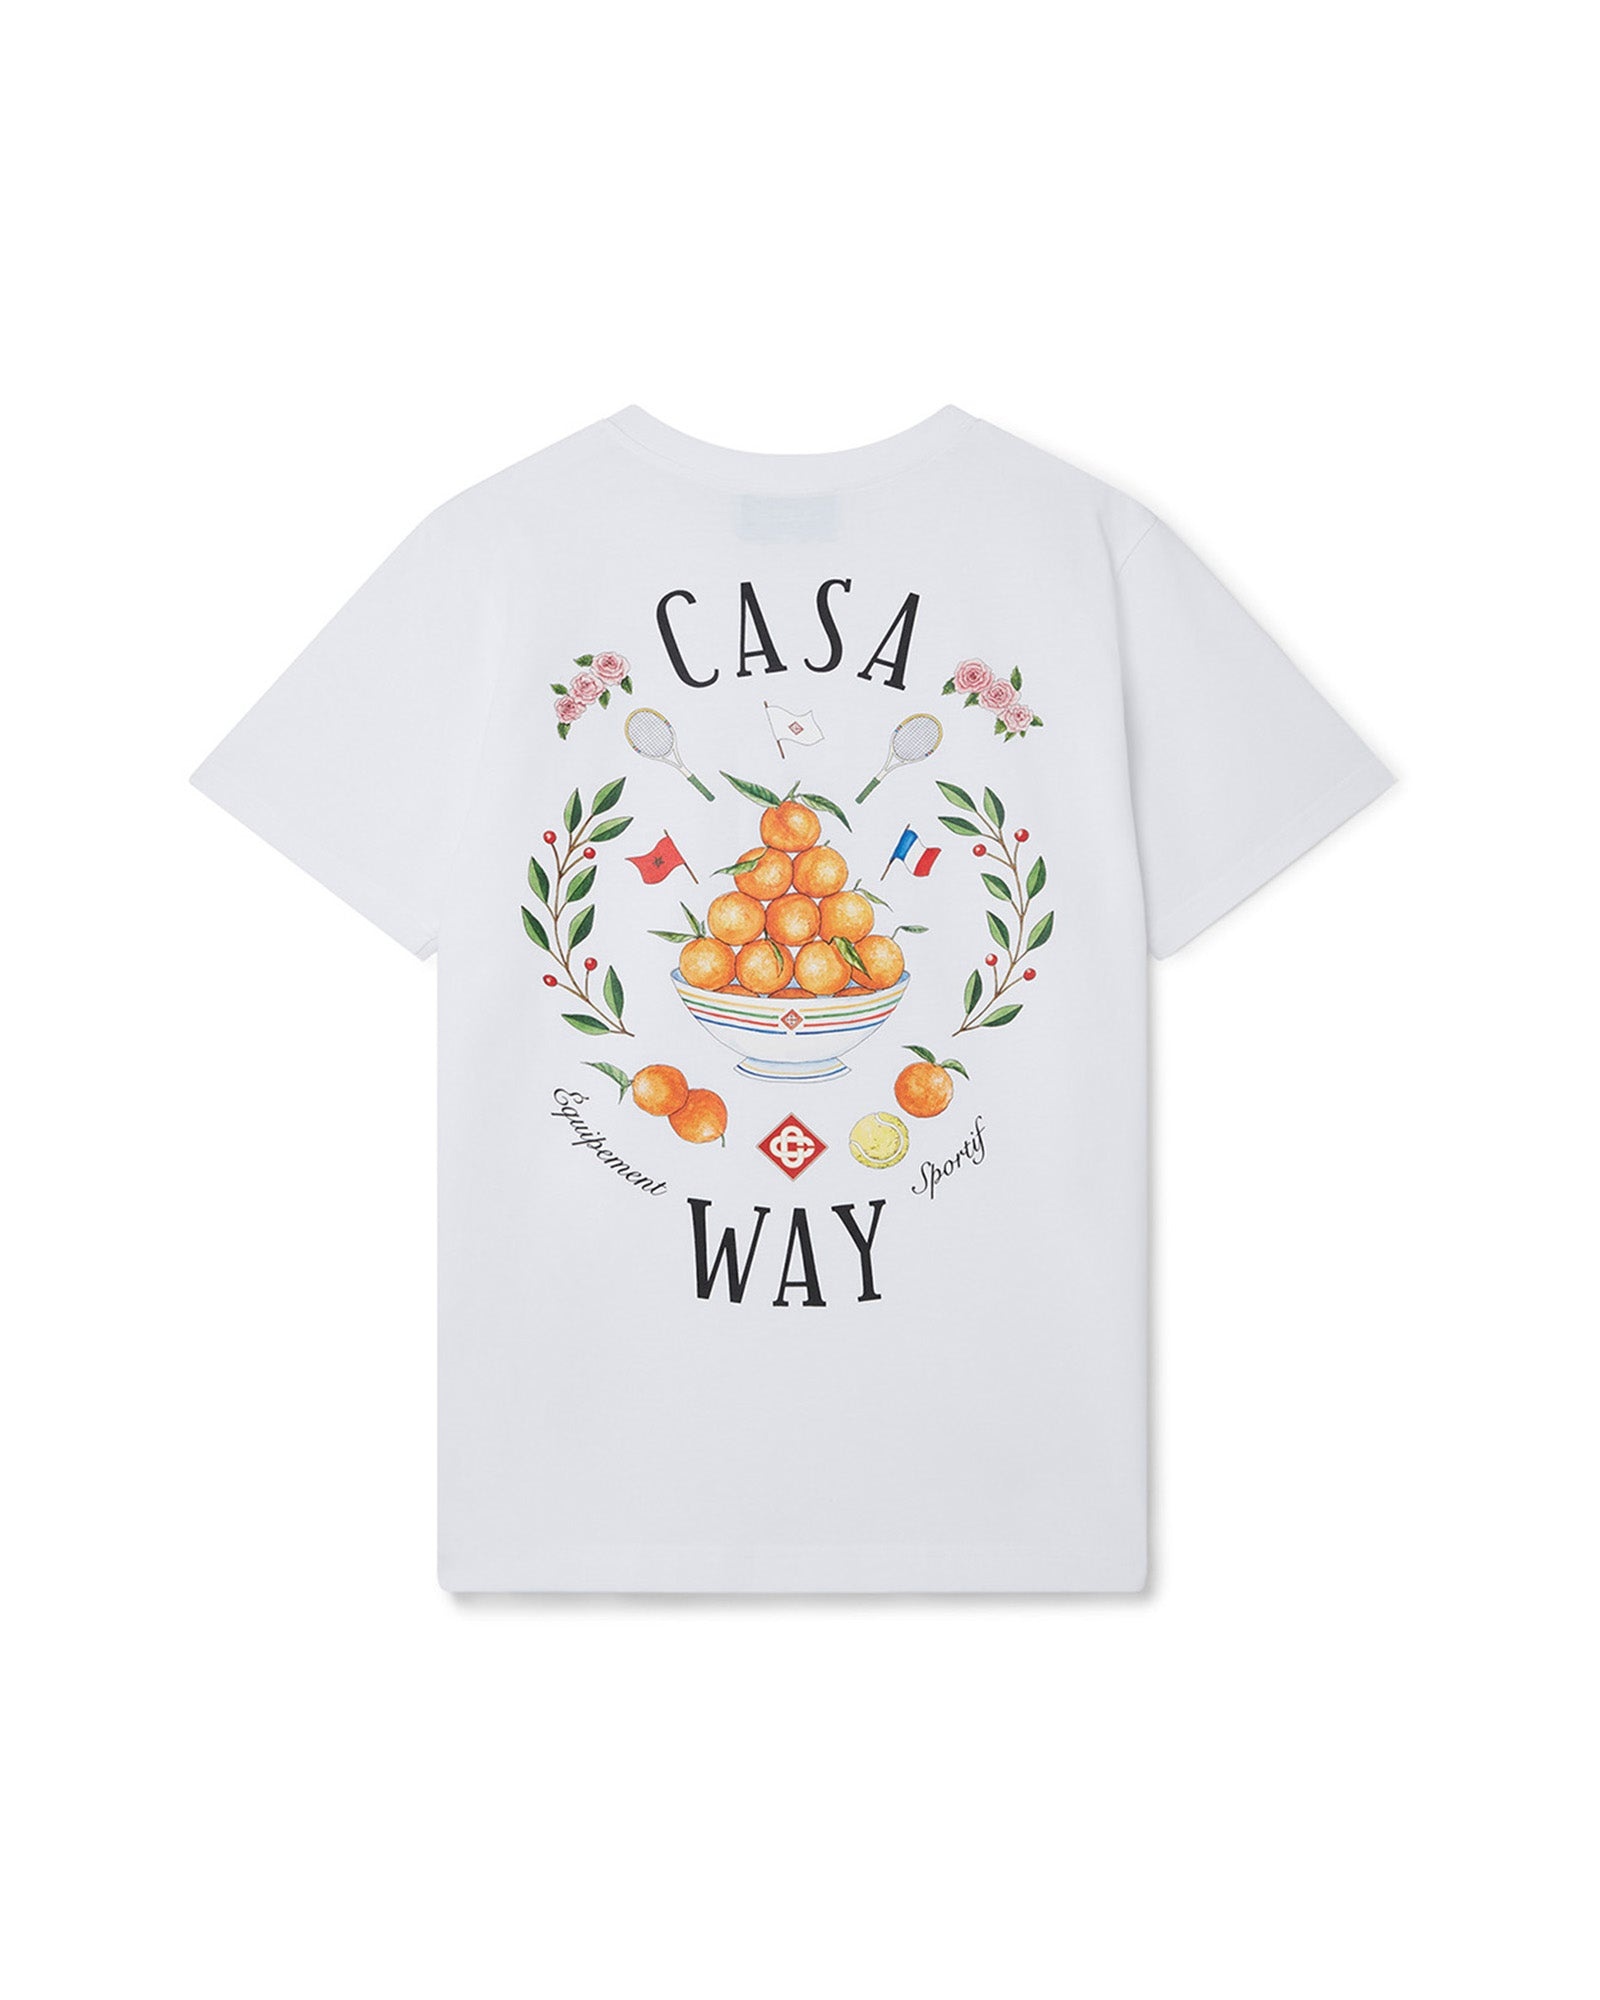 Casa Way T-Shirt - 2